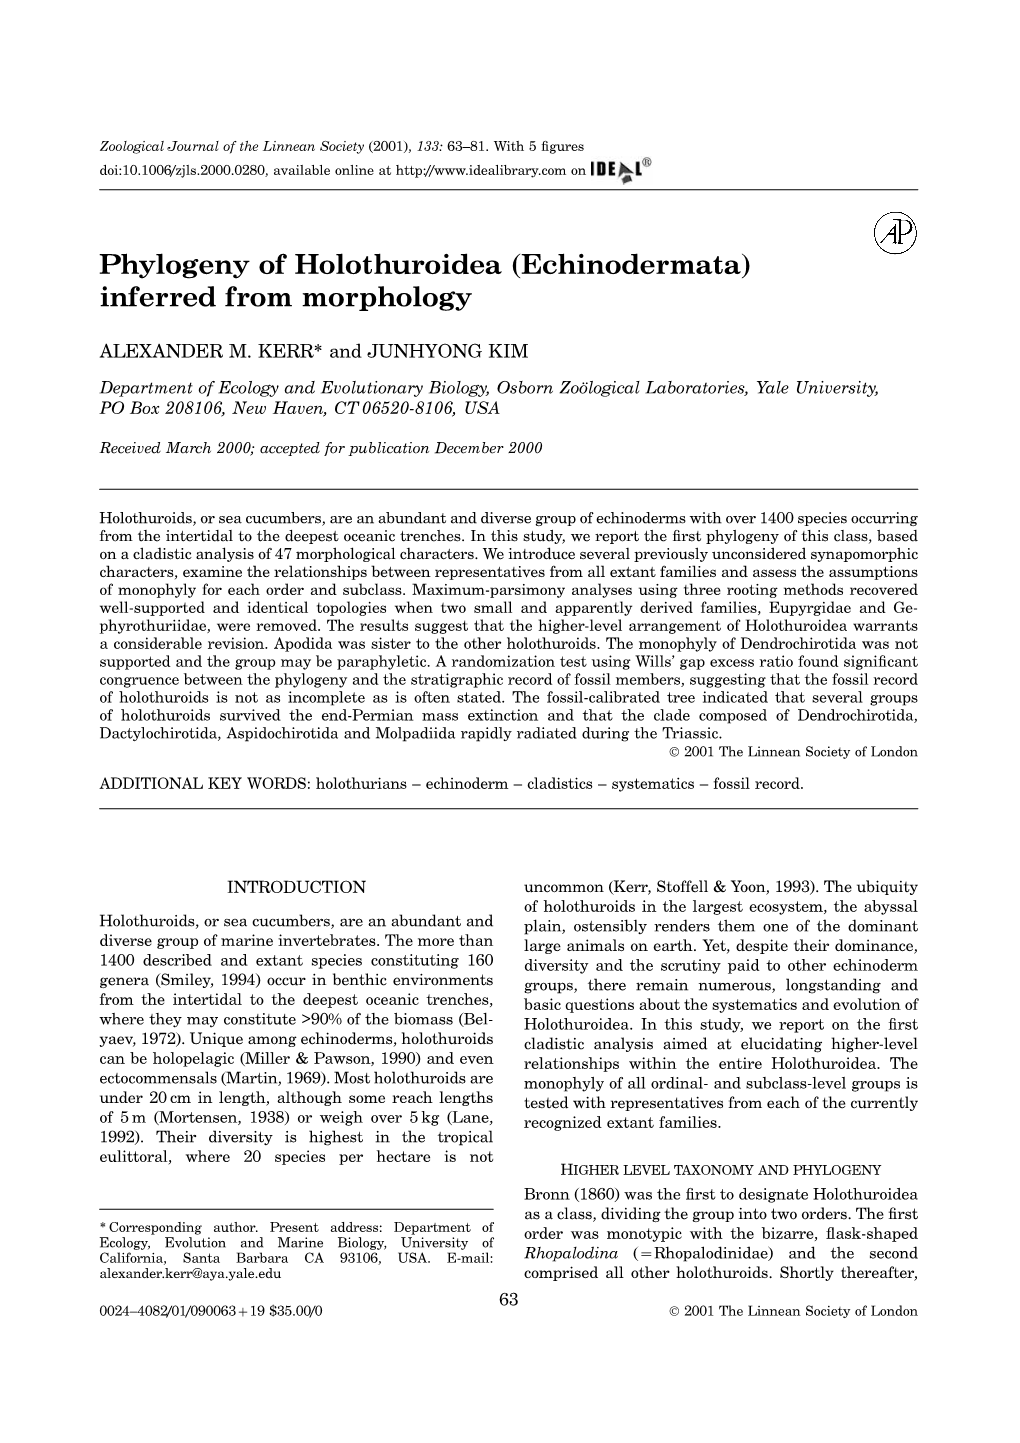 Phylogeny of Holothuroidea (Echinodermata) Inferred from Morphology